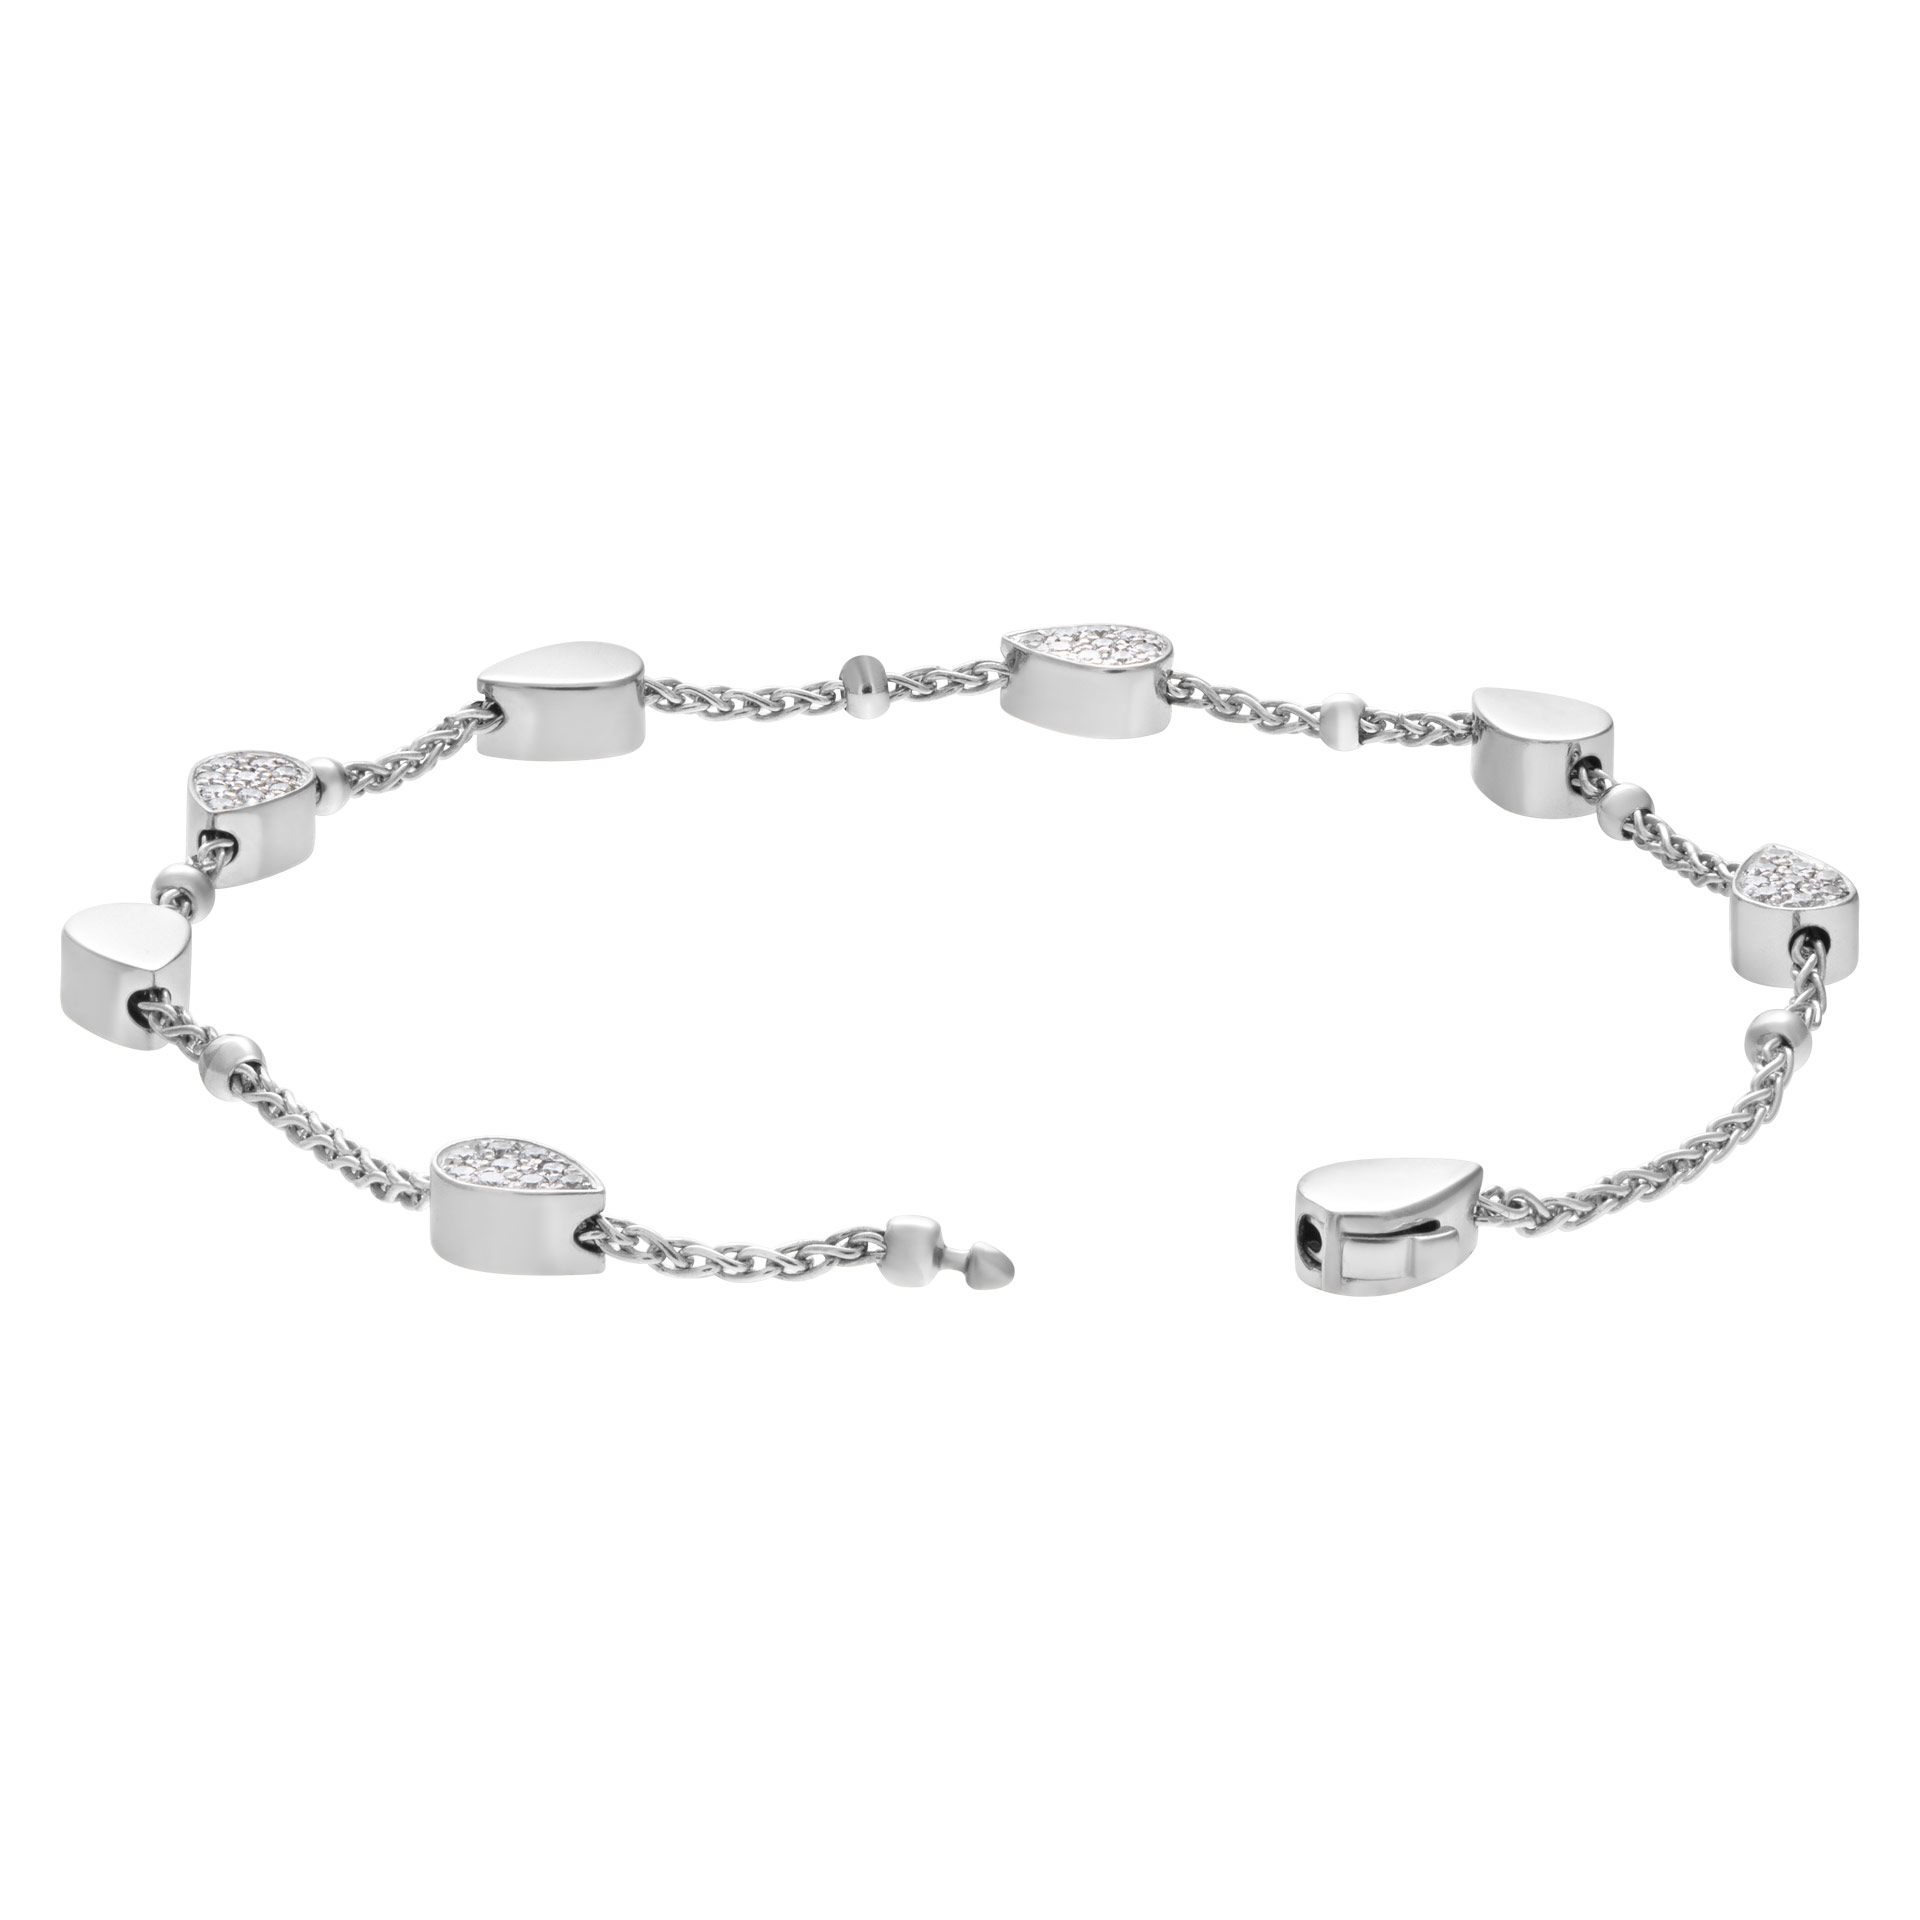 Piaget Lucea diamond bracelet 18k white gold